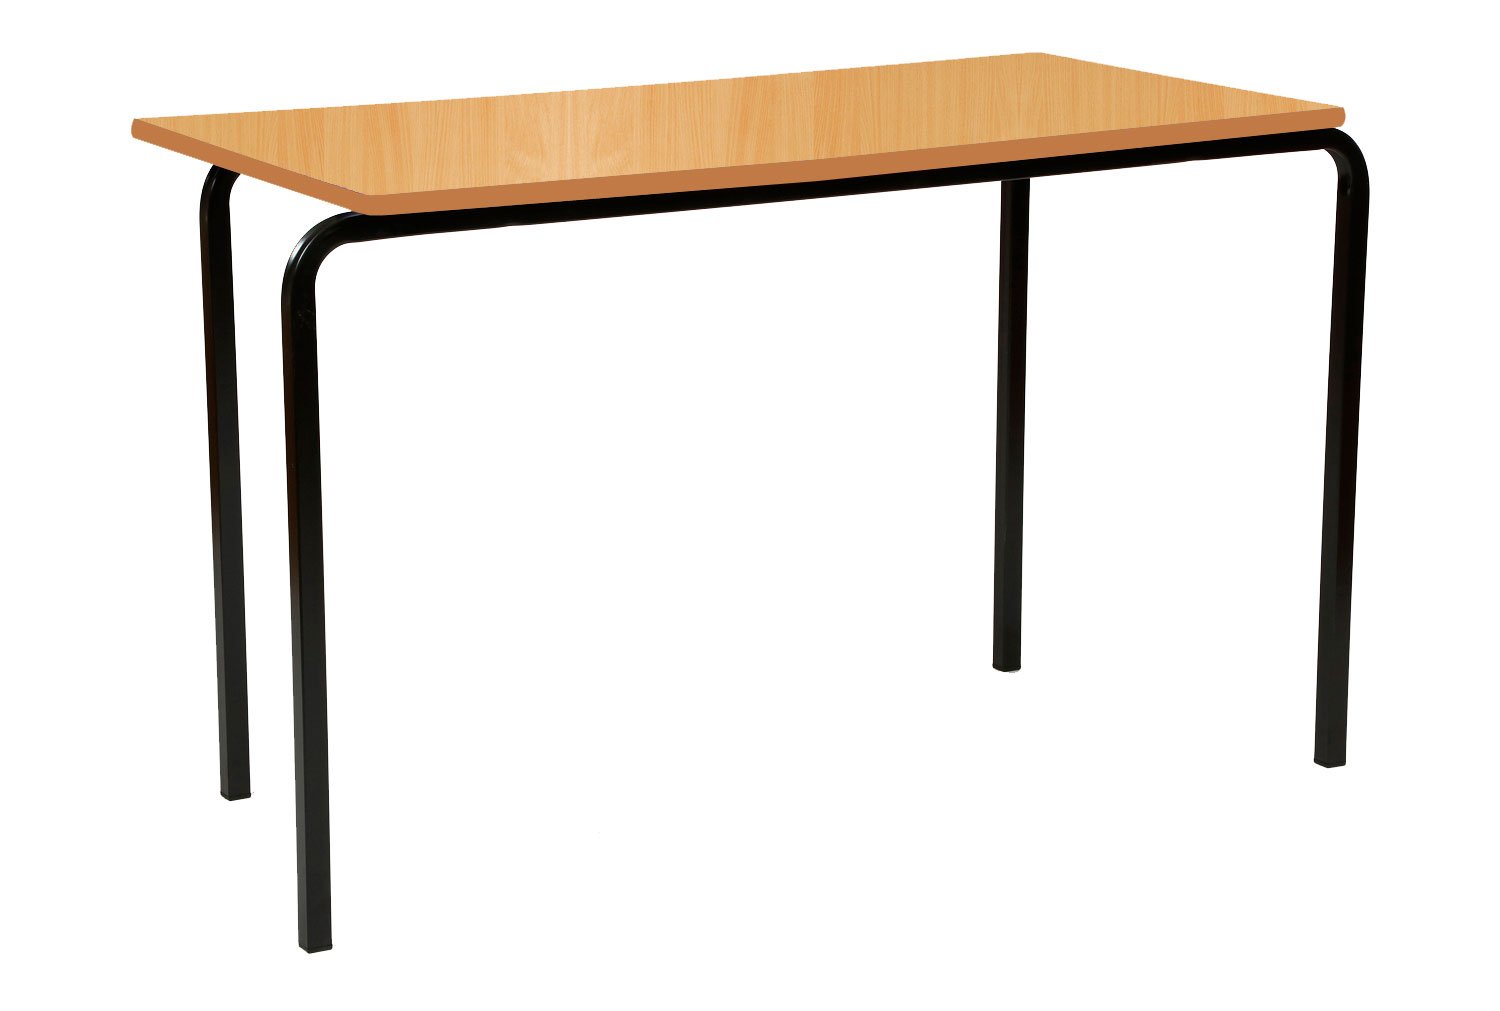 Qty 6 - Educate Crush Bent Rectangular Classroom Table 6-8 Years (PU Edge), 110wx55dx59h (cm), Black Frame, Maple Top